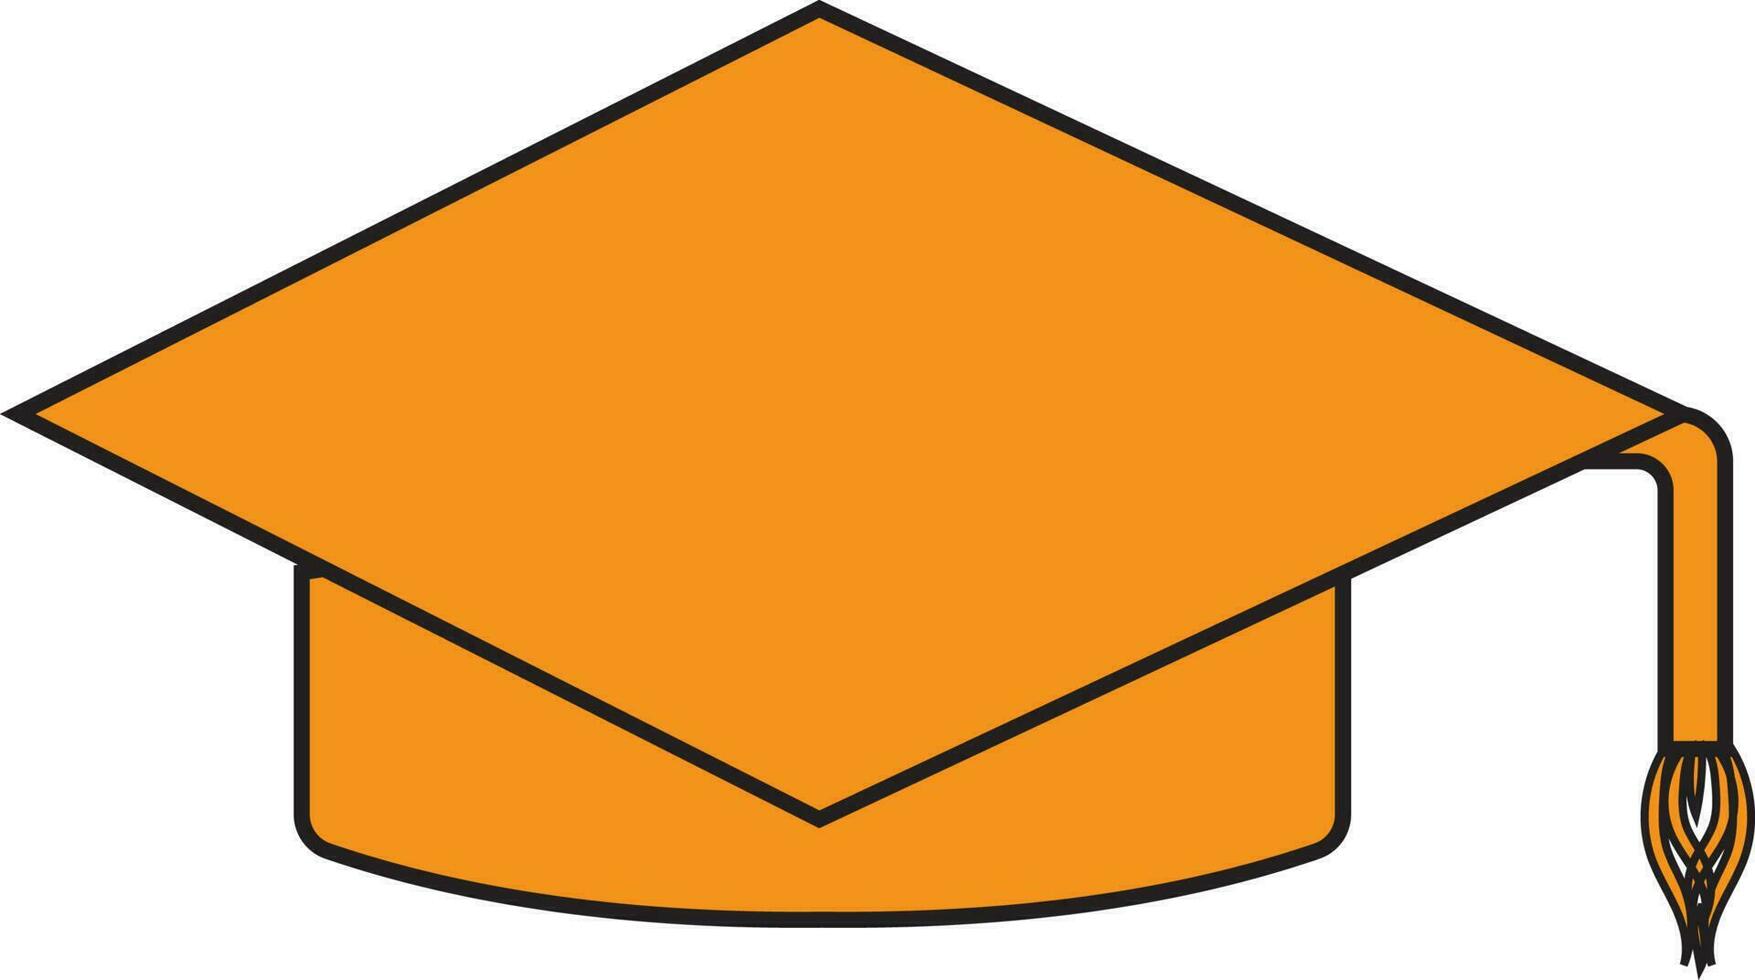 Illustration of university graducation hat icon. vector